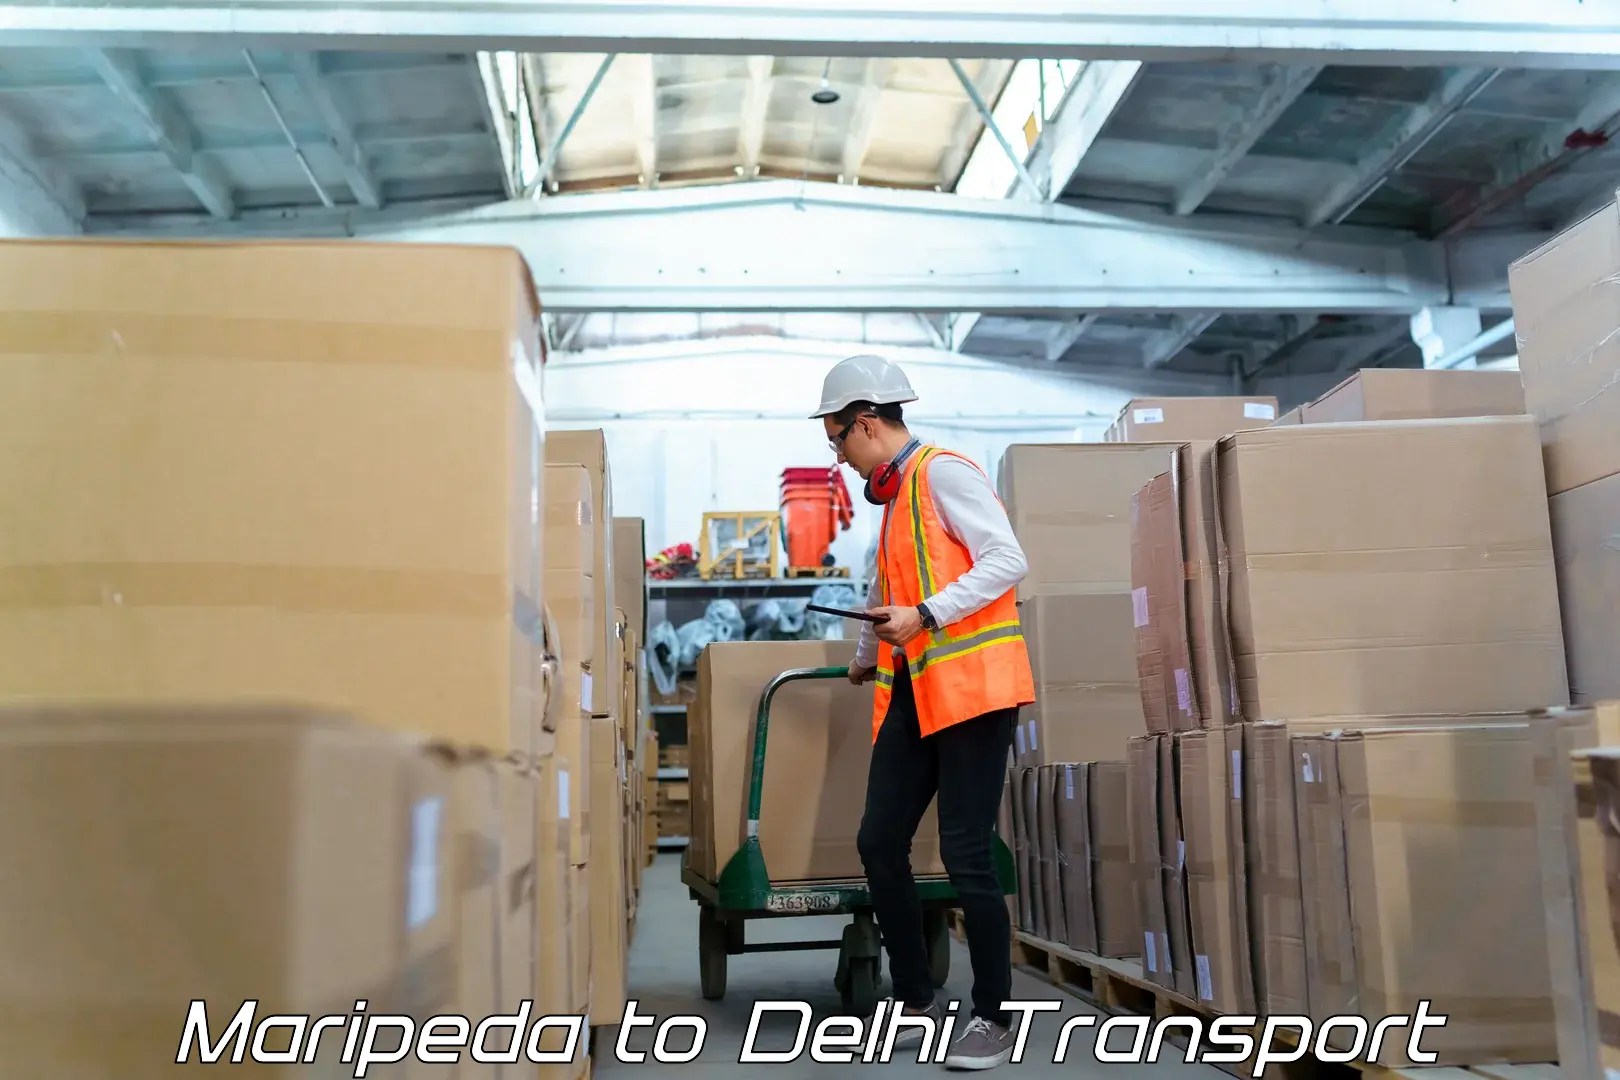 Lorry transport service Maripeda to Delhi